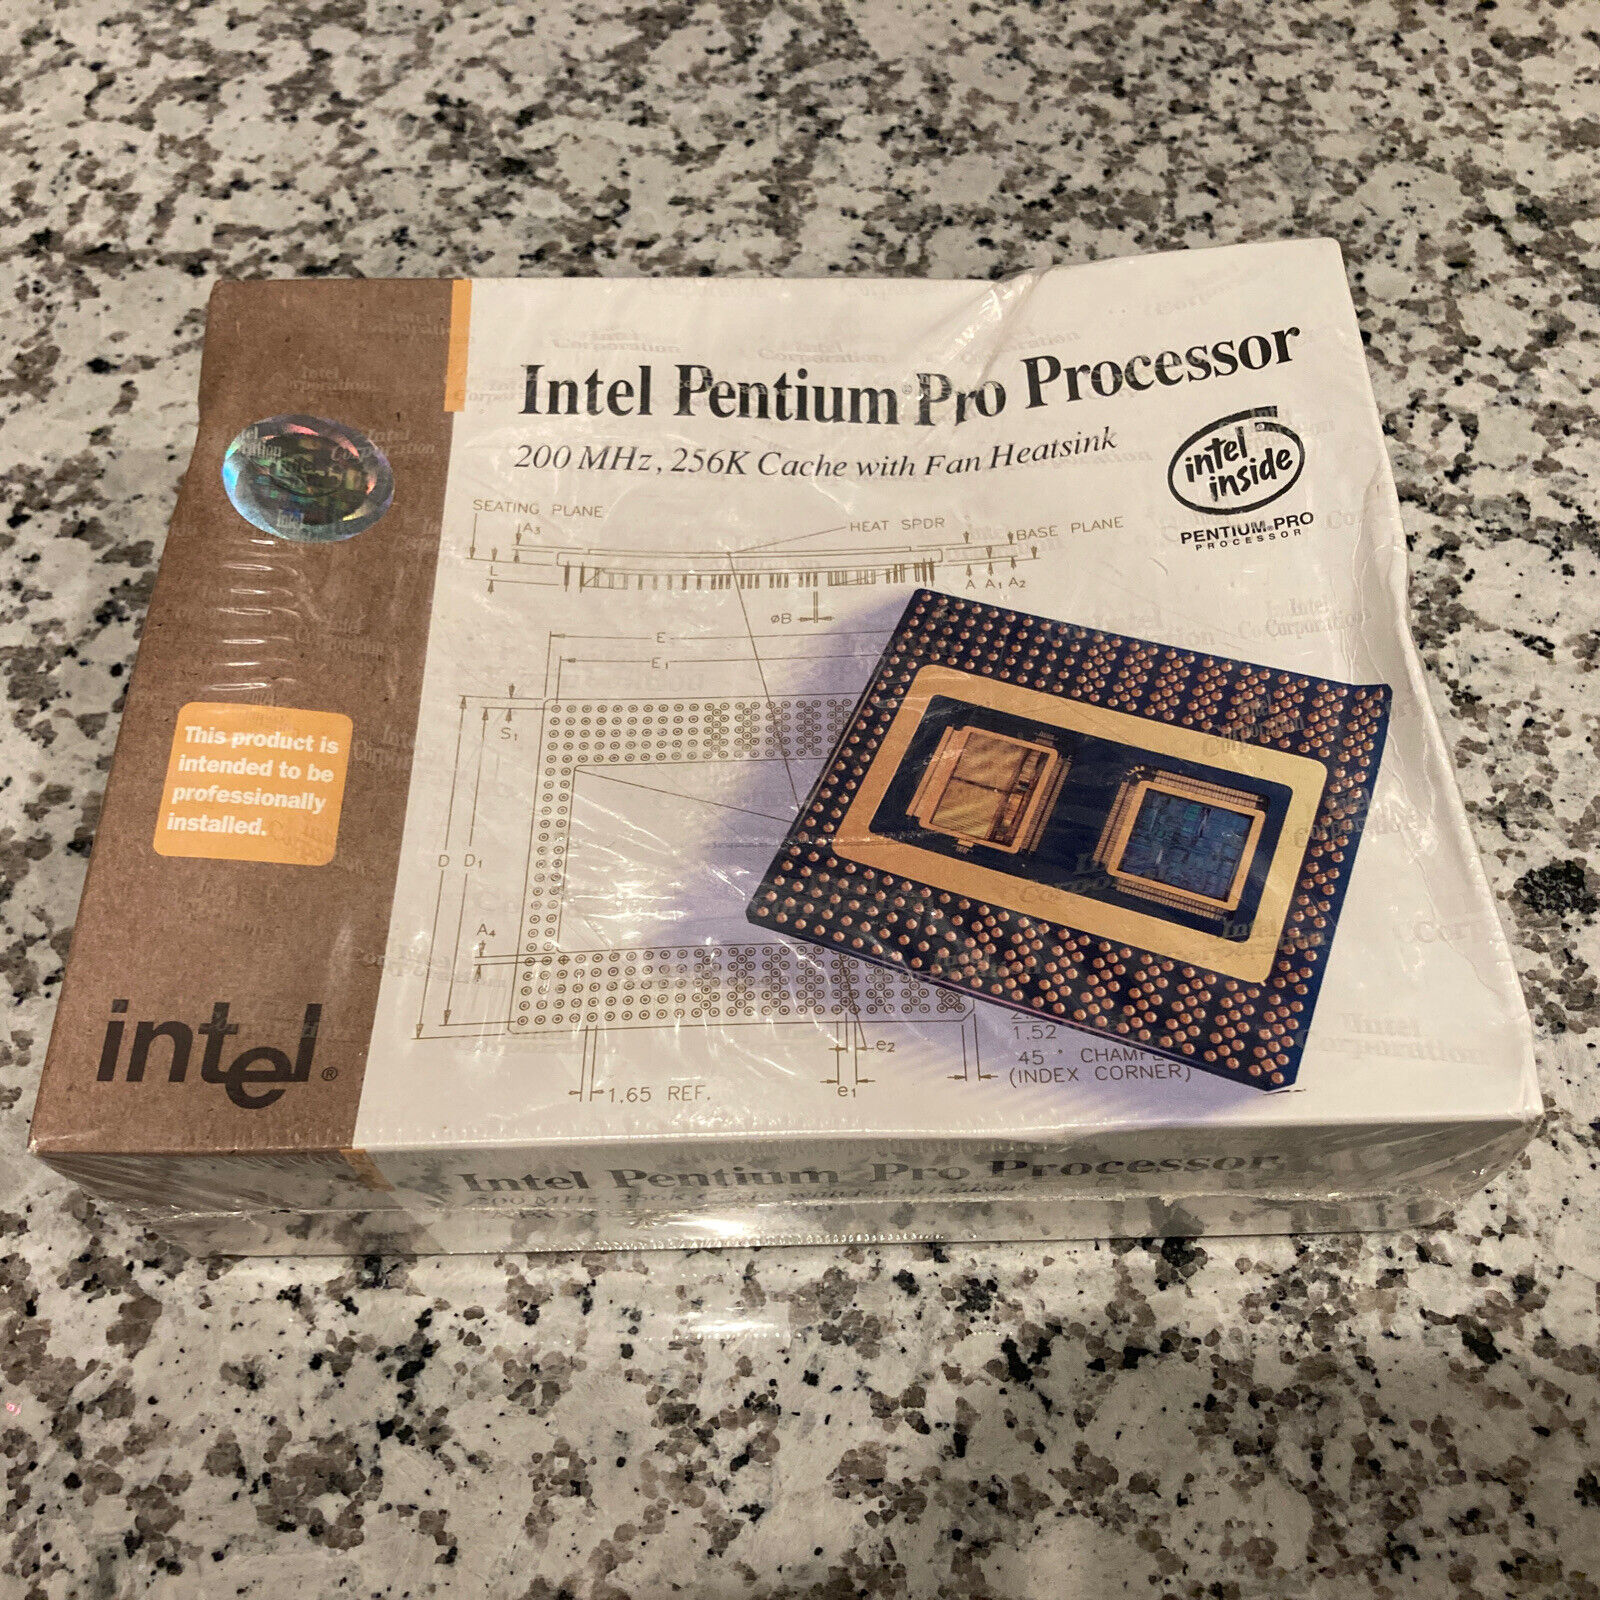 Intel Pentium Pro 200 MHz Processor - Retail Boxed ABOXBP80521-200 SL23M